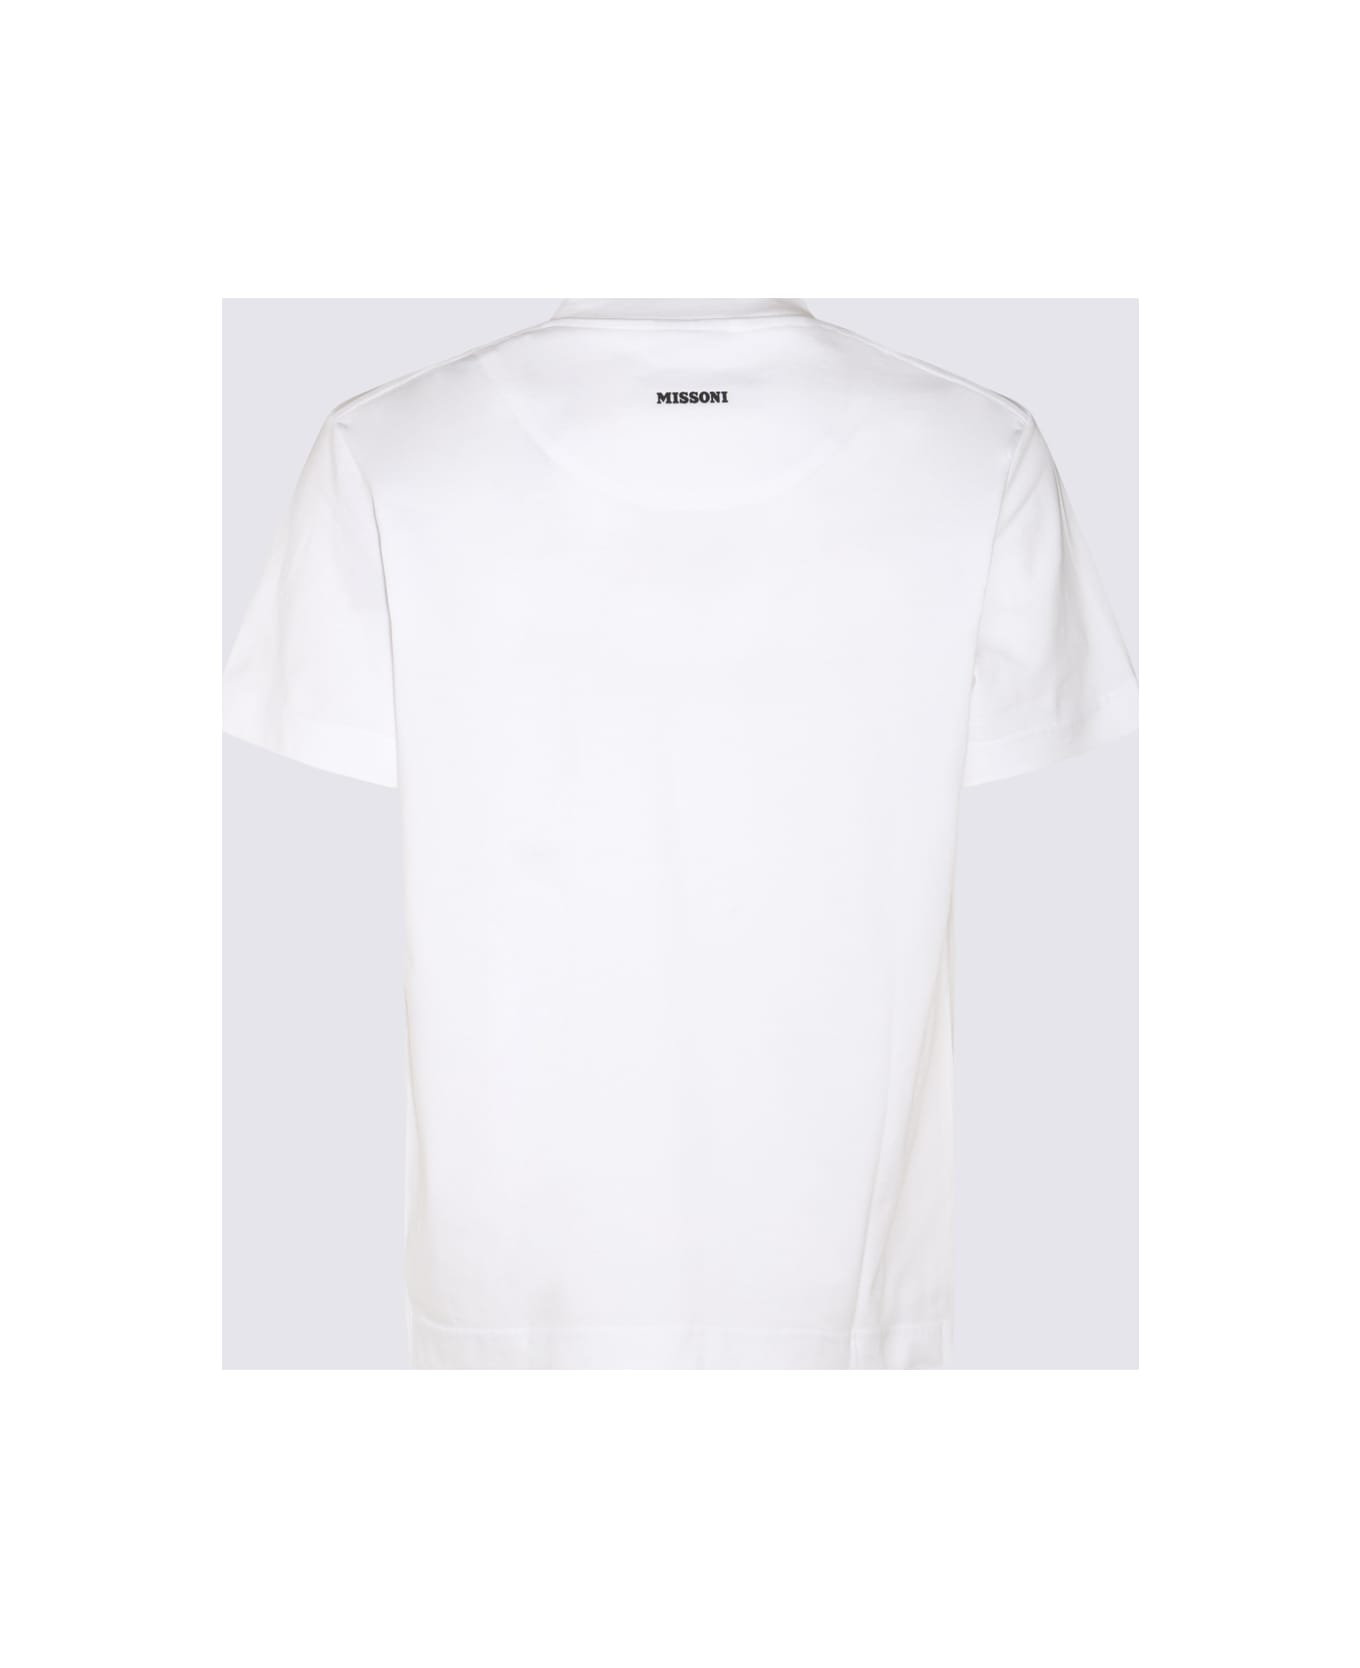 Missoni White Multicolour Cotton T-shirt - WHITE BASE GREEN BROWN